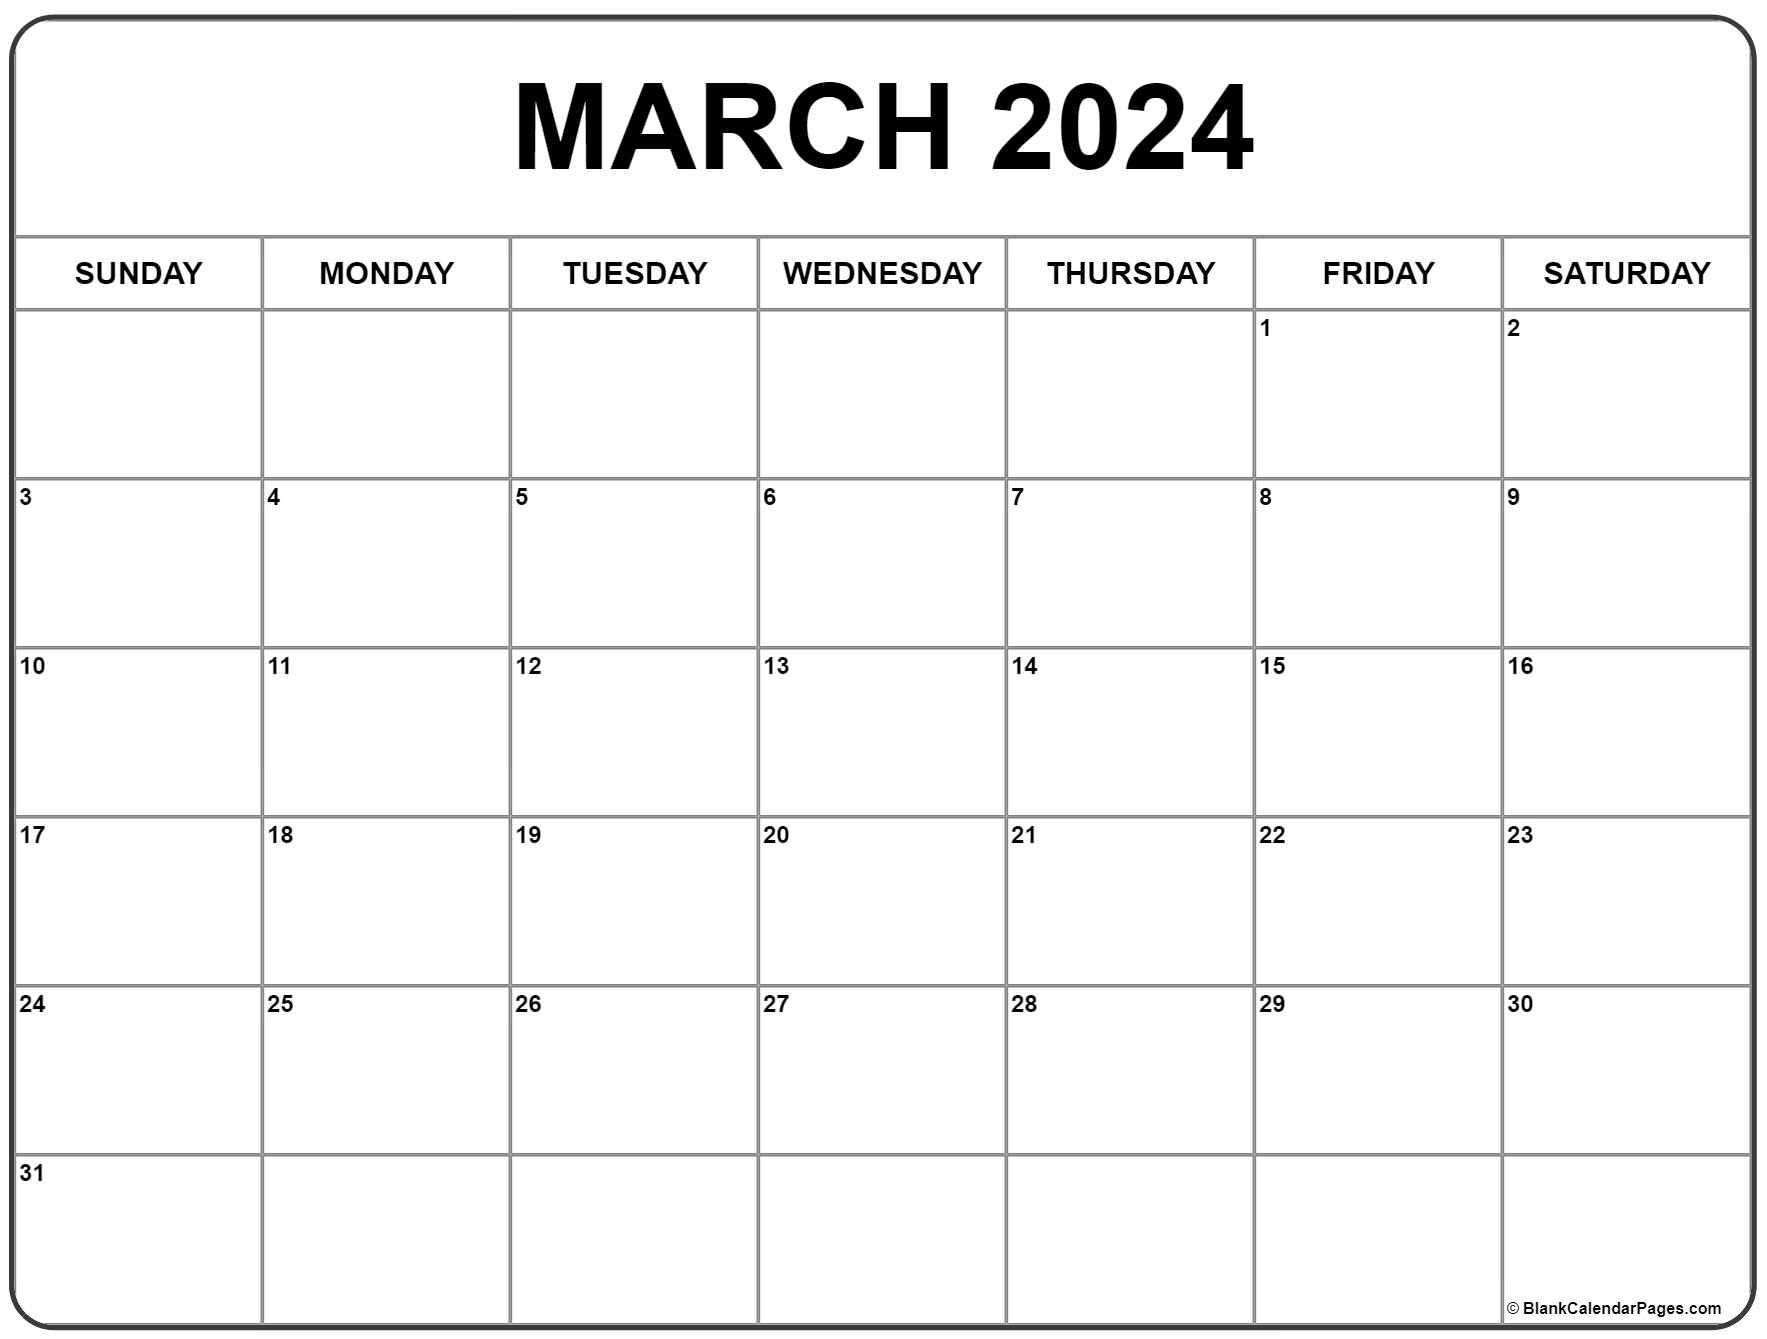 March 2024 Calendar | Free Printable Calendar for Printable March 2024 Calendar